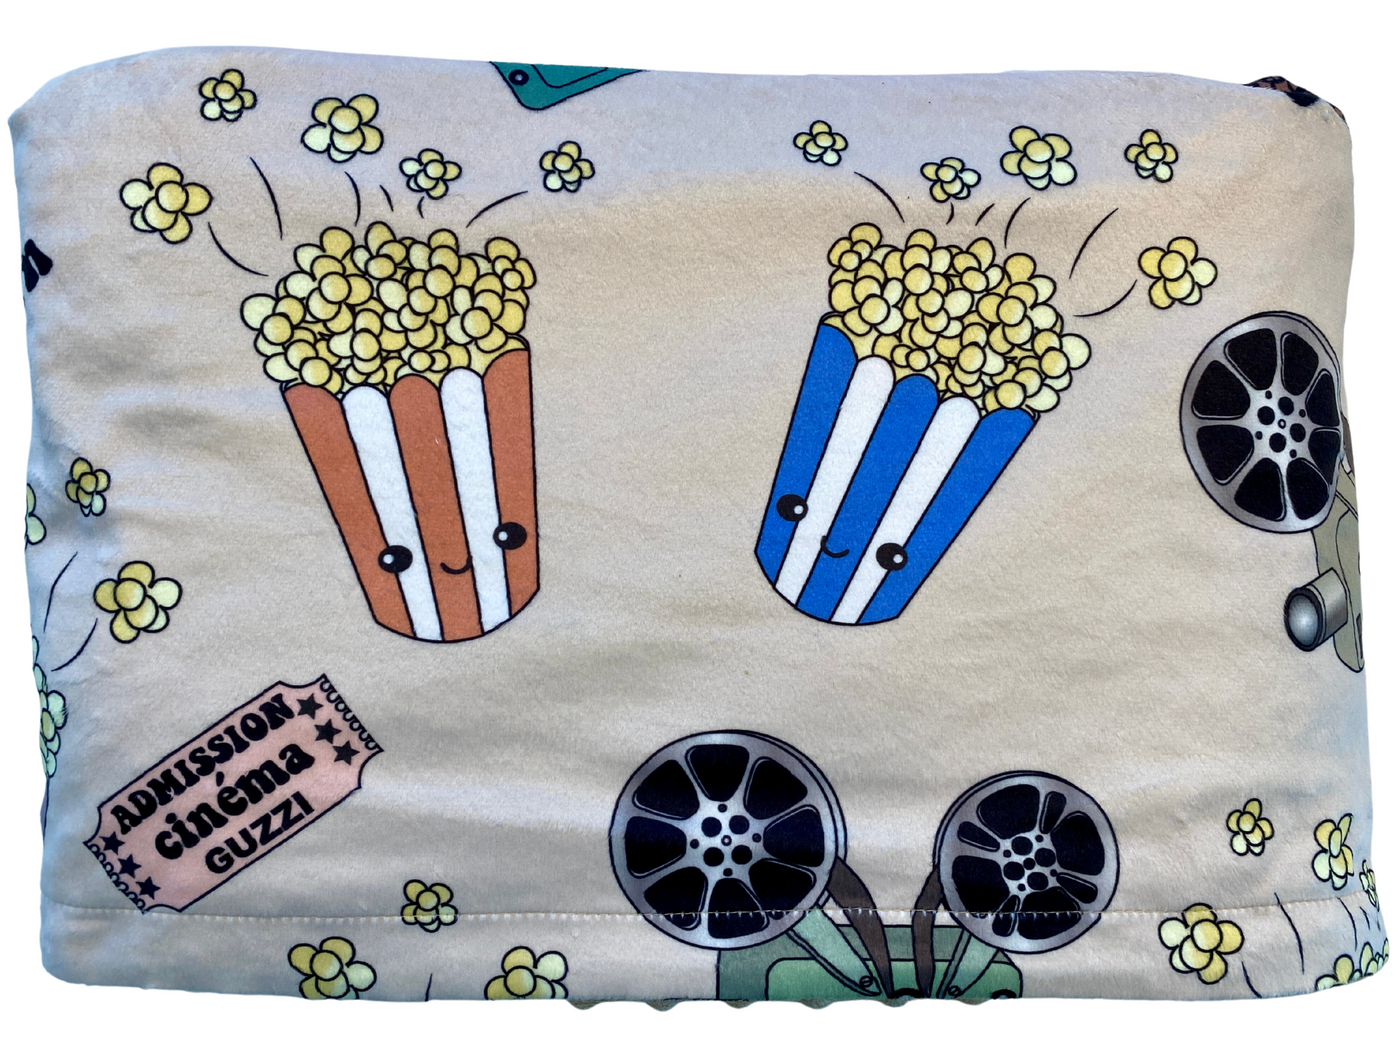 Giant blanket: Cinema and Popcorn